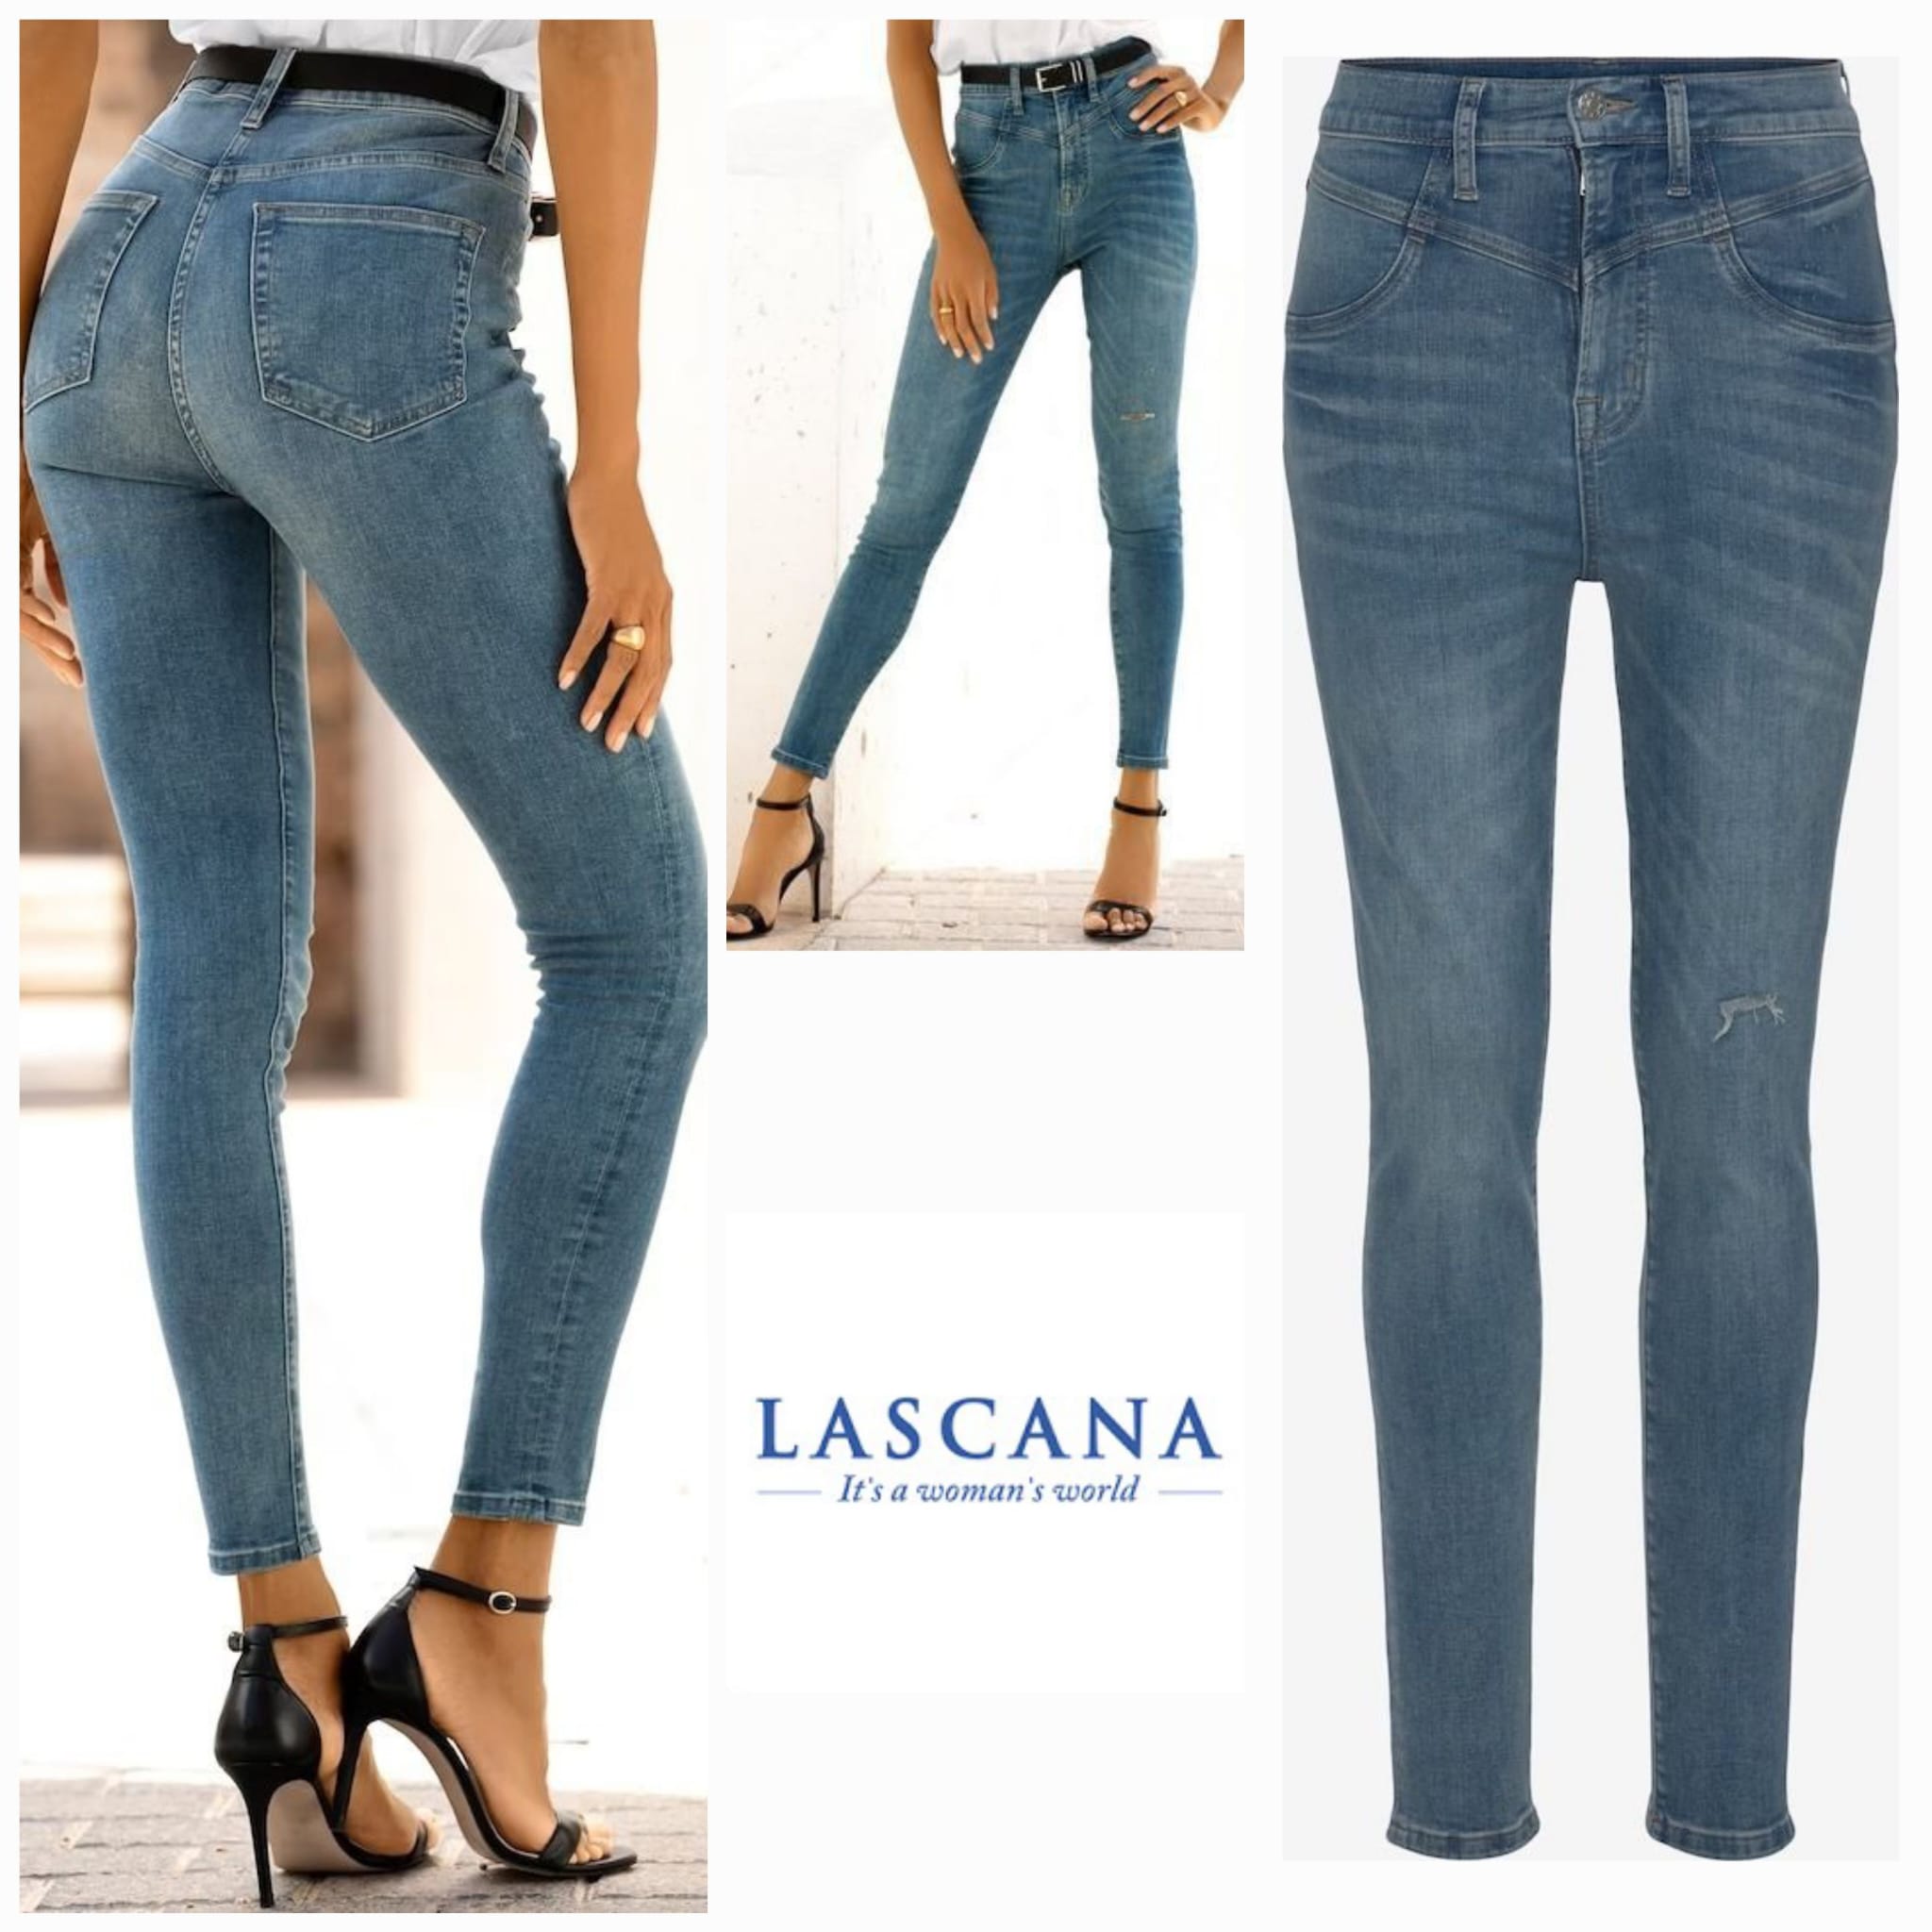  Women's skinny jeans from Lascana